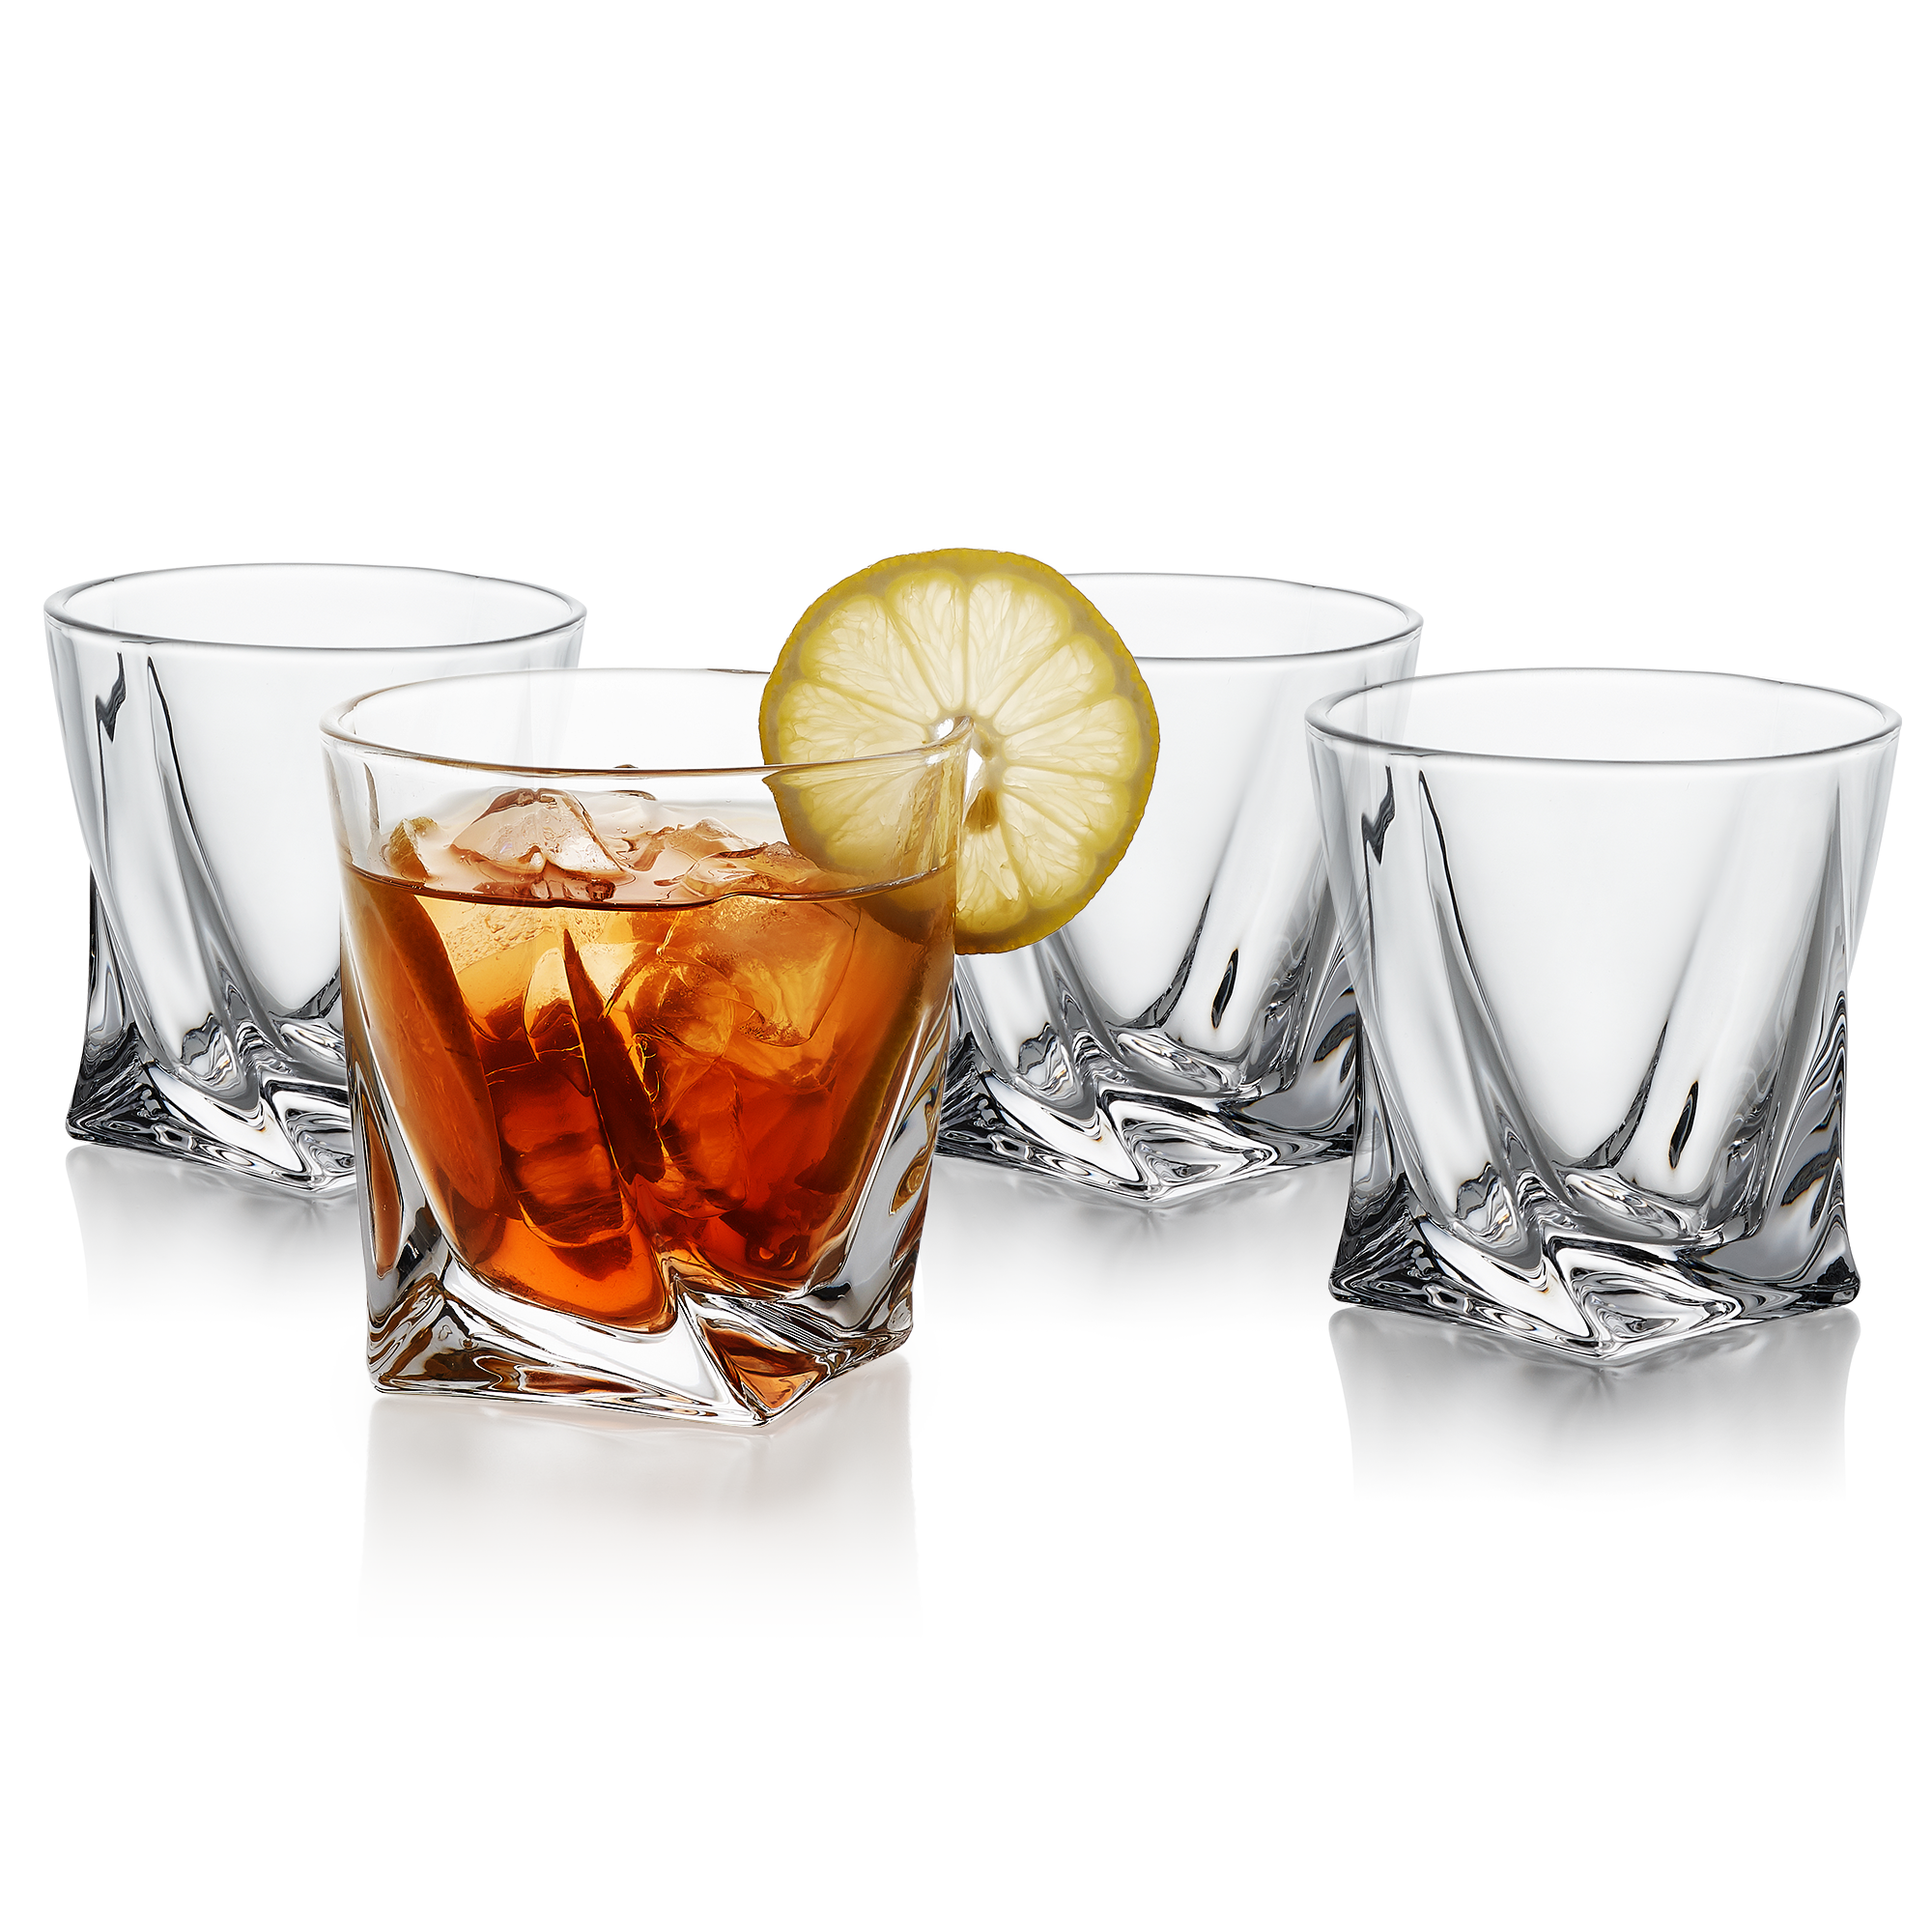 GoodGlassware Swirl Whiskey Glasses (Set of 4) 10 oz - Premium Transparant